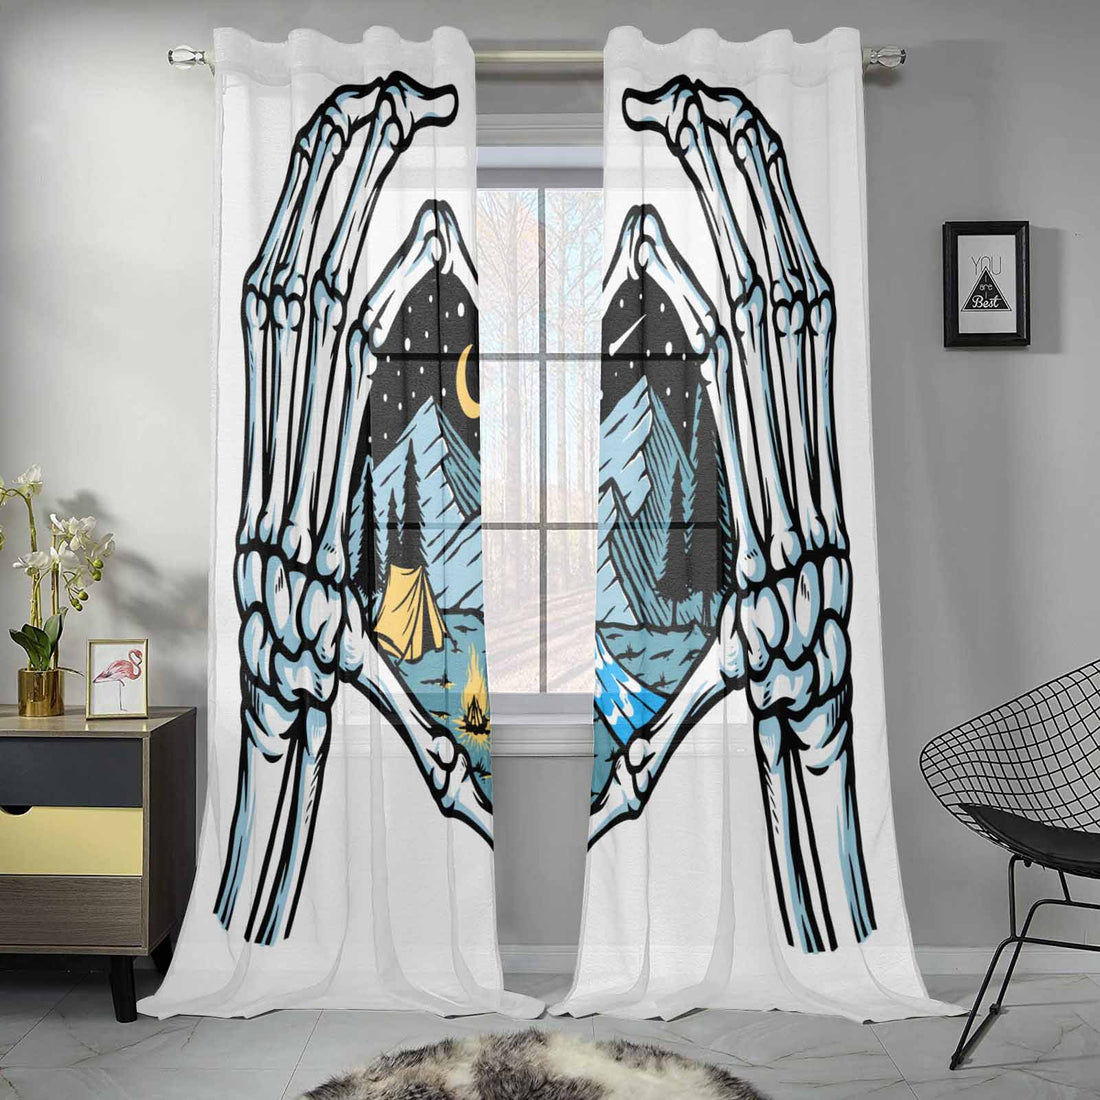 Kate McEnroe New York Sheer 2 - Panel Window Curtains In Skeleton Loves MountainsWindow CurtainsDG1169875DXH7858D